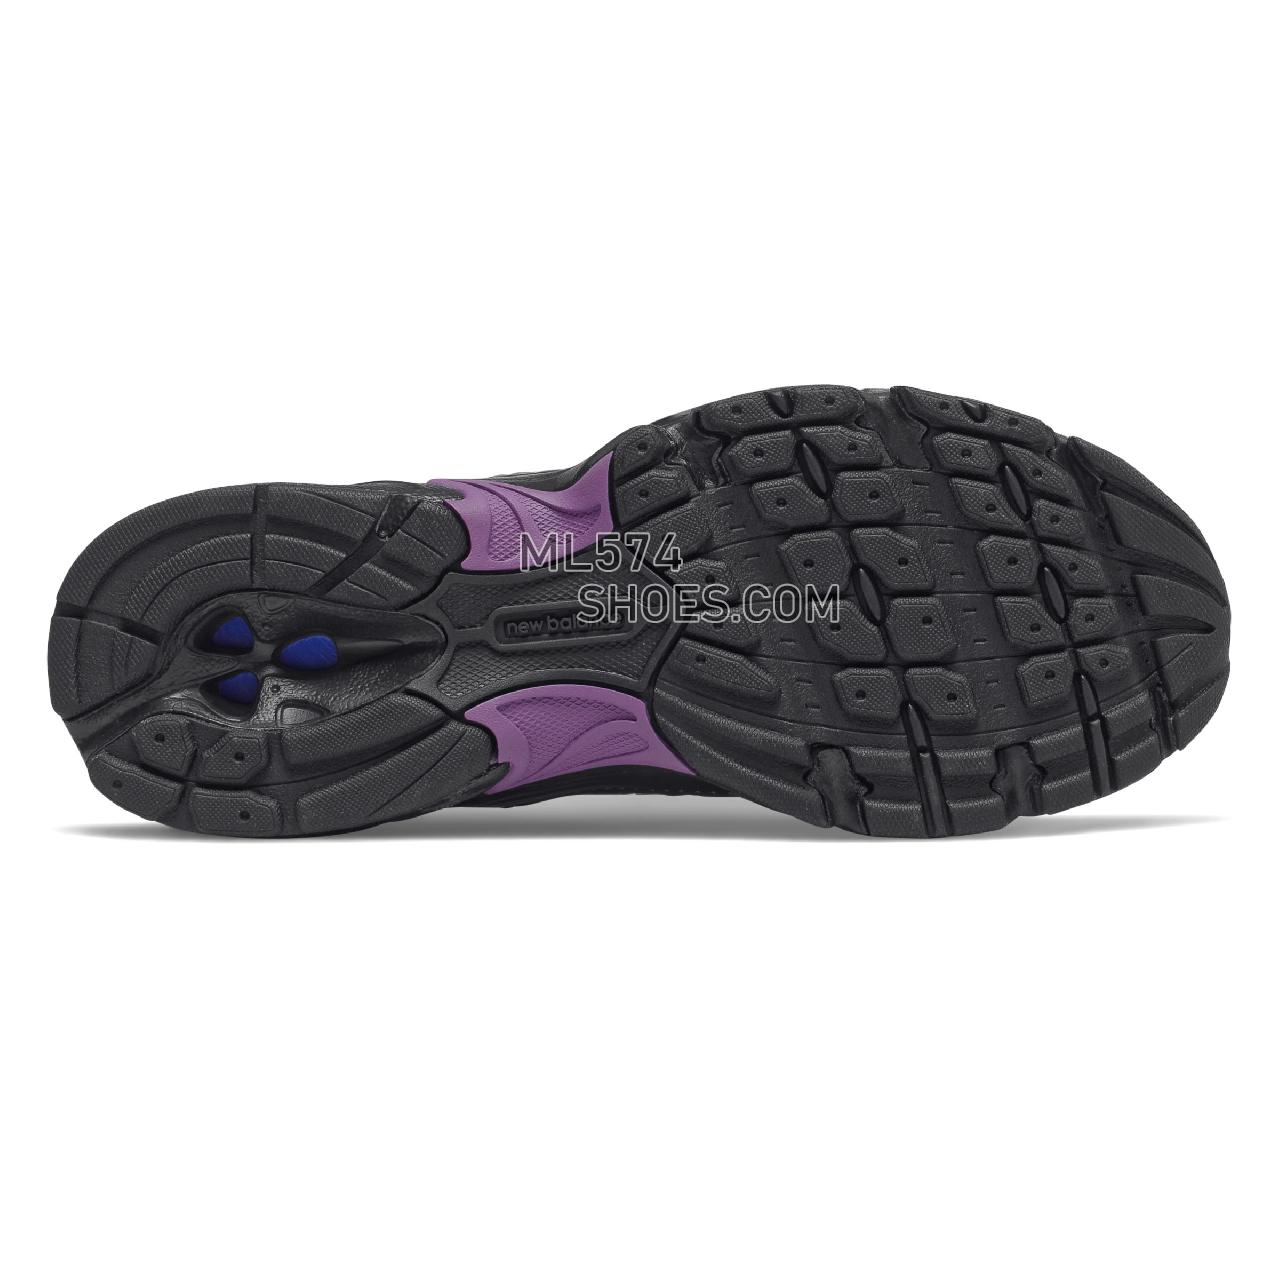 New Balance 530 - Unisex Men's Women's Classic Sneakers - Magnet with Sour Grape - MR530MLC